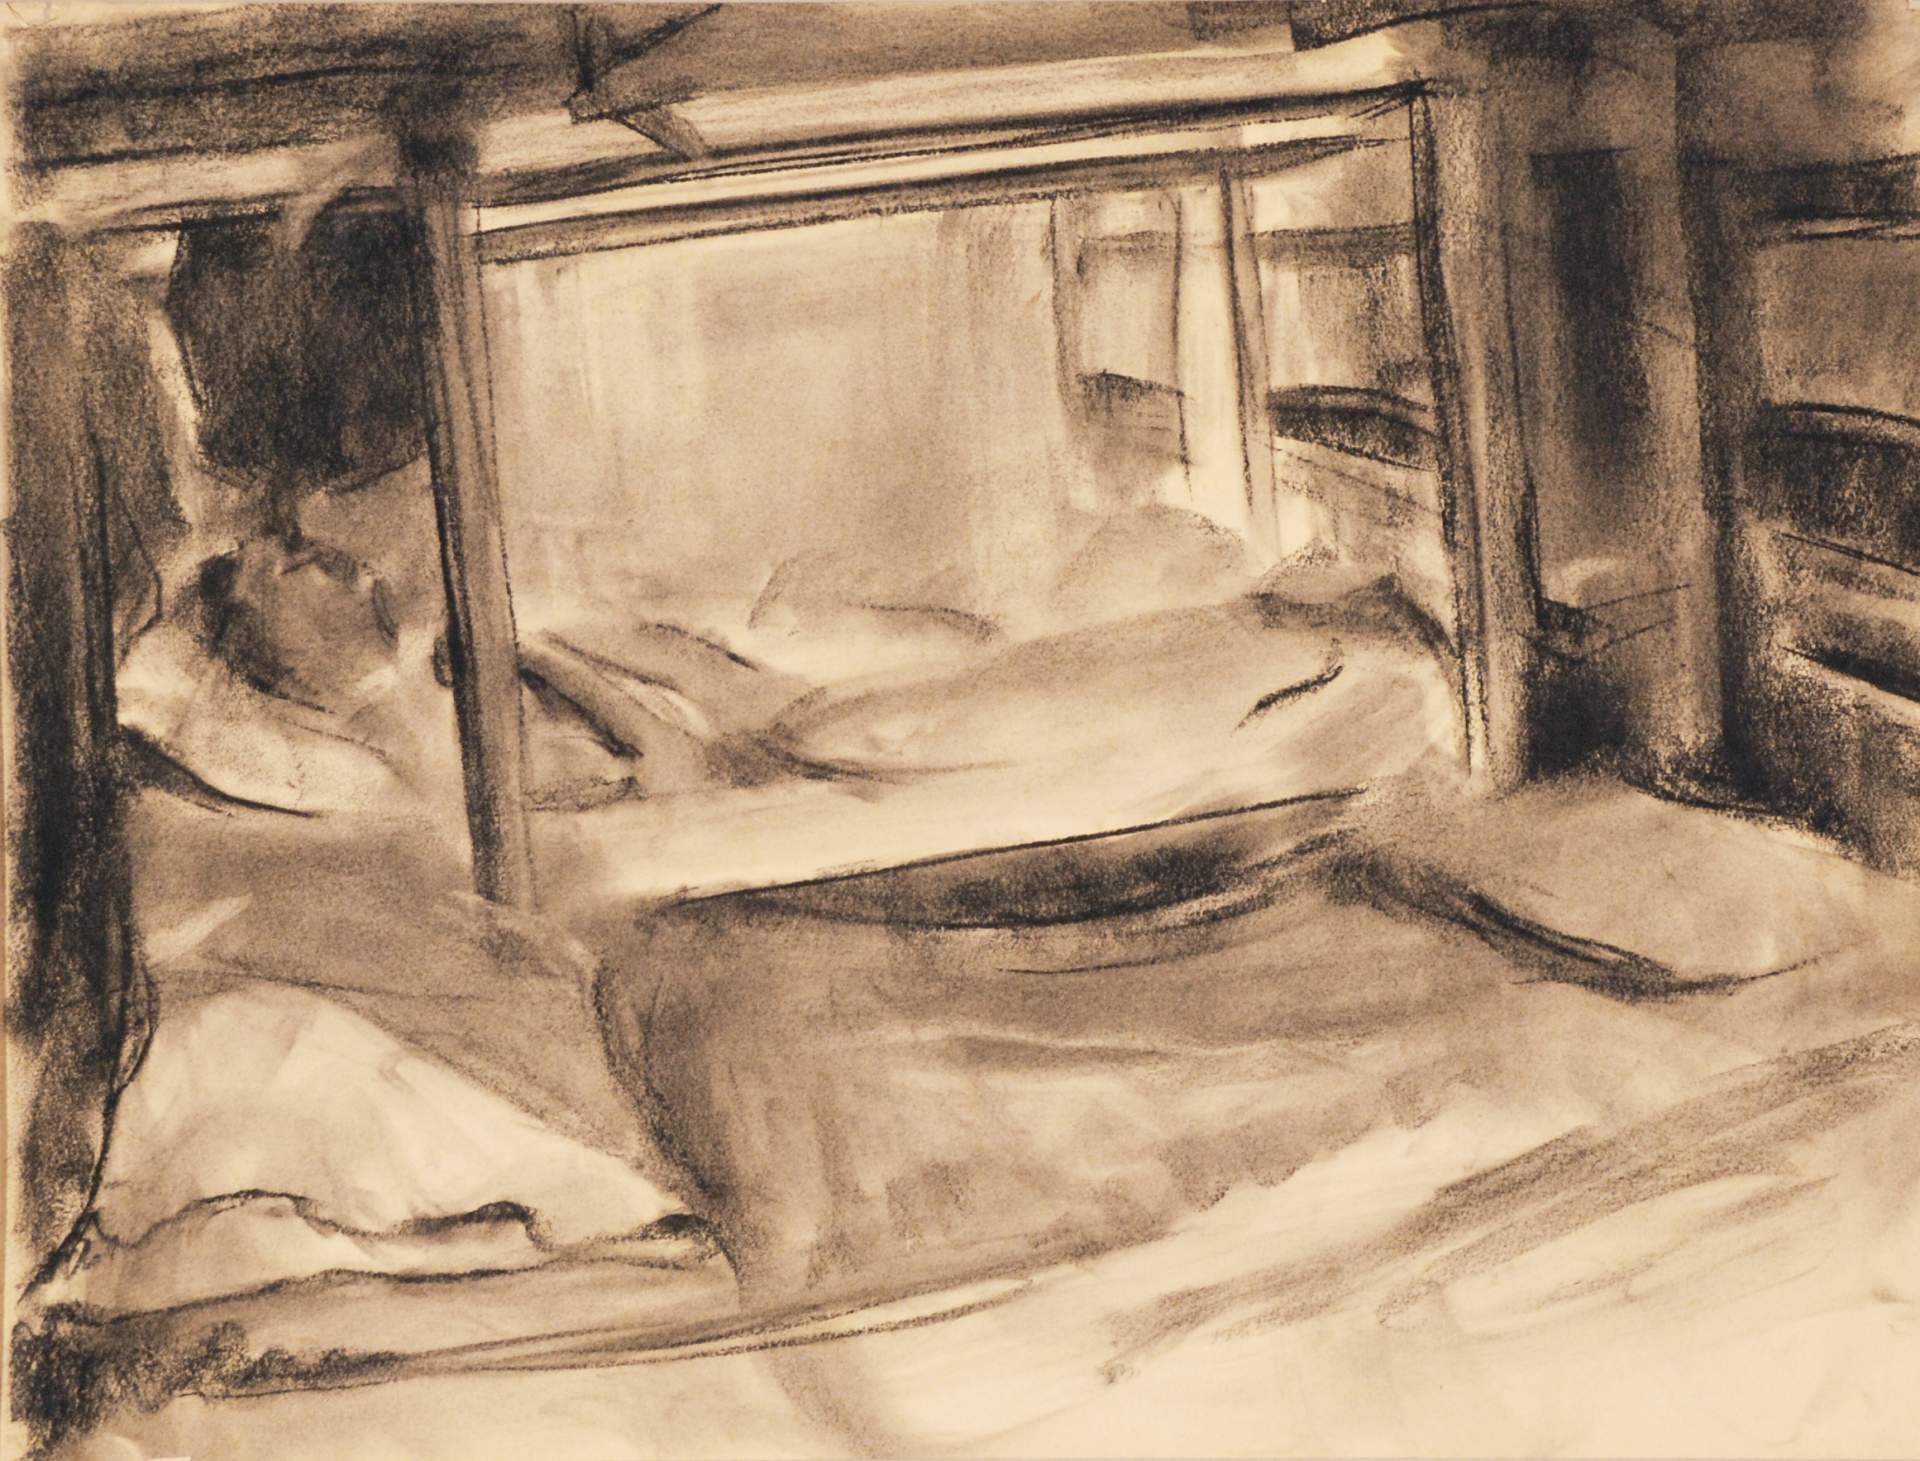 Untitled [sleeping figure in barracks]